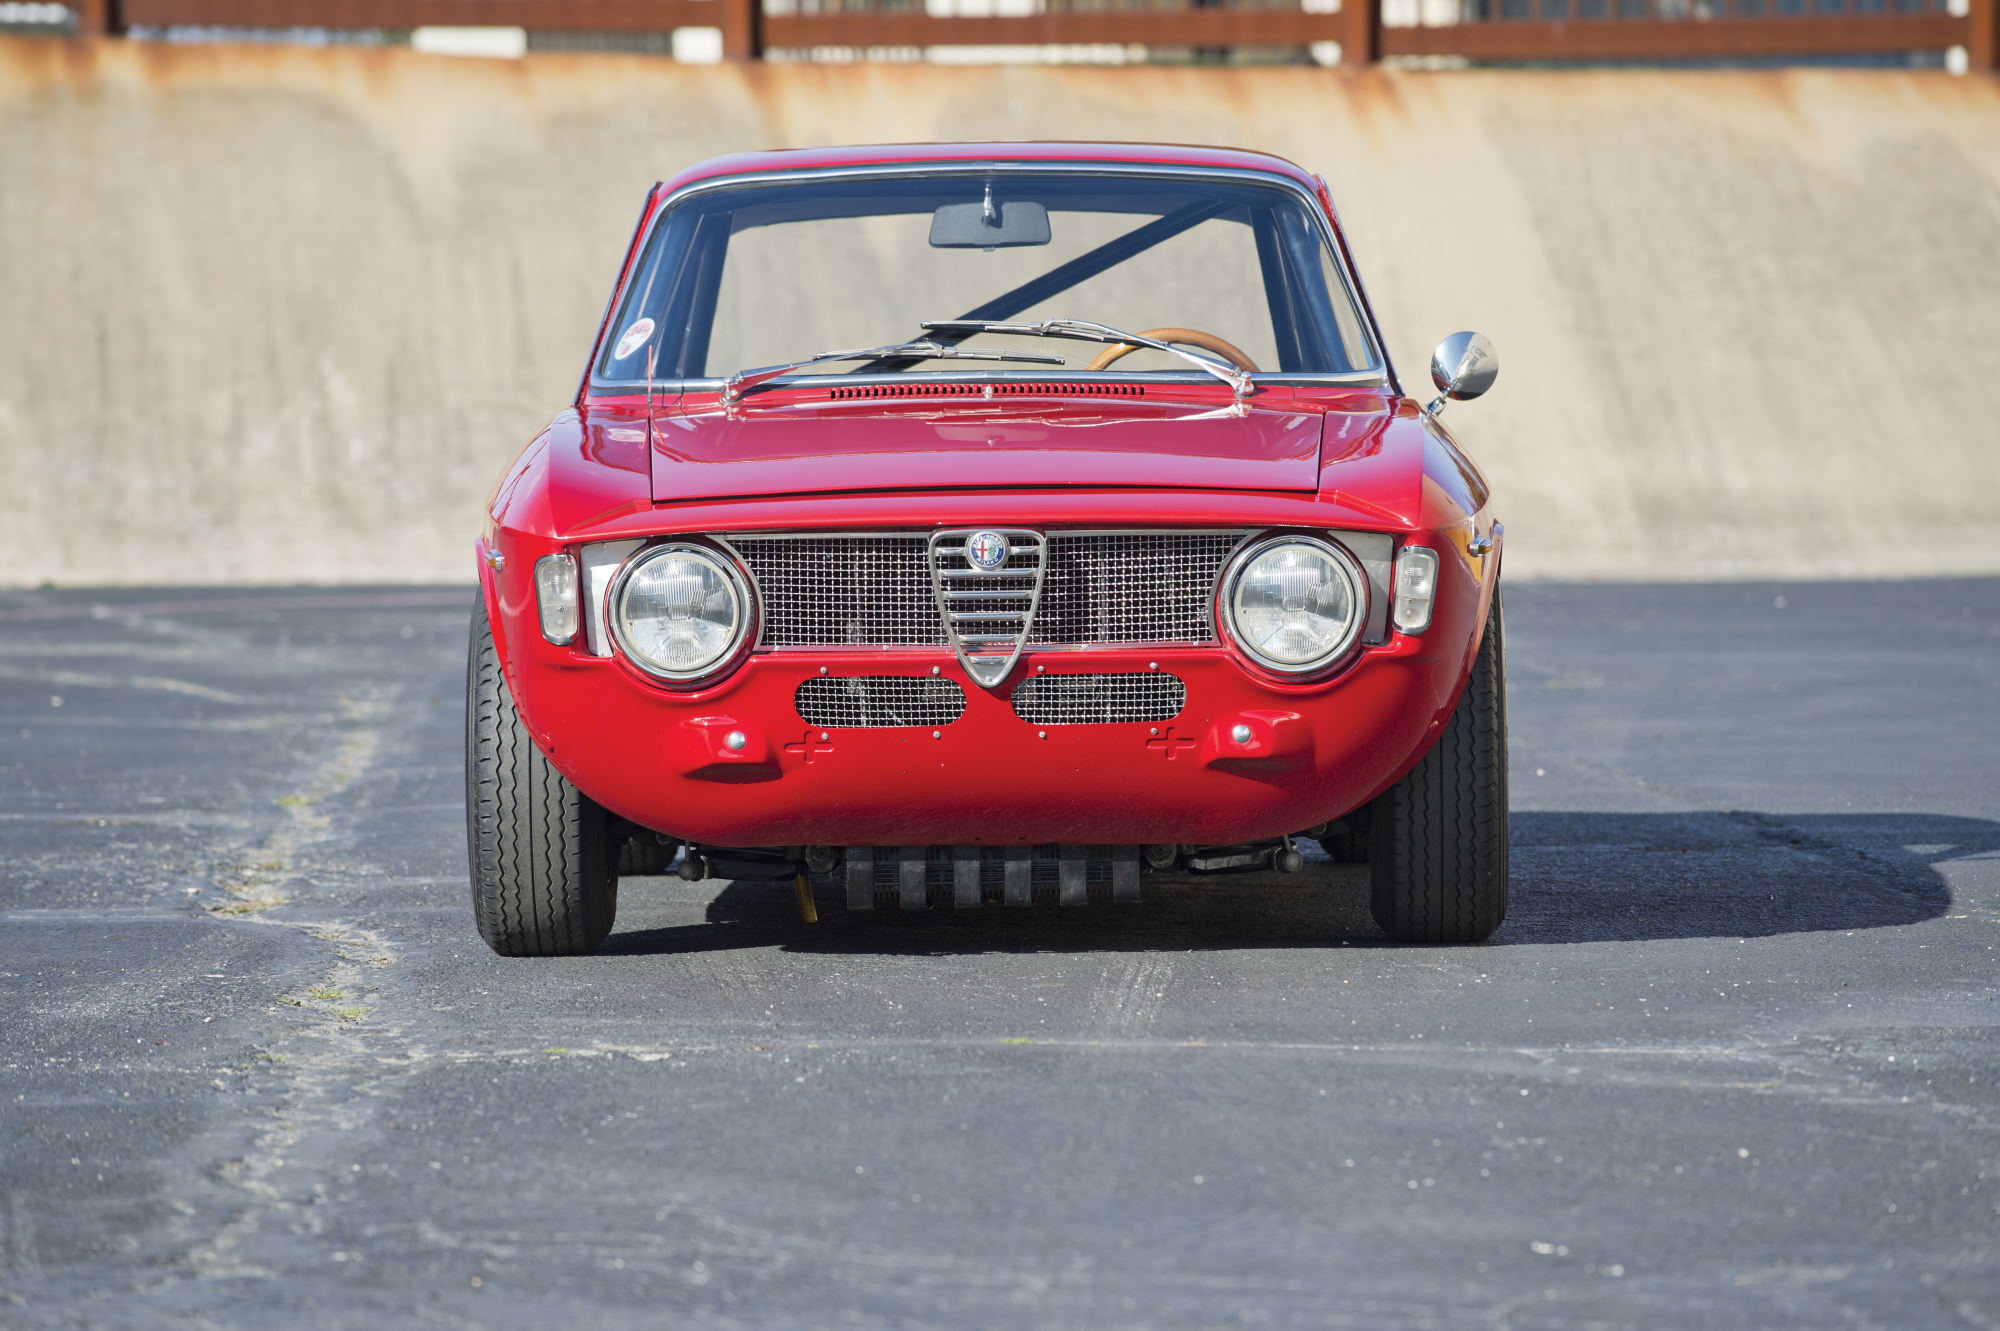 Alfa Romeo GTA Backgrounds, Compatible - PC, Mobile, Gadgets| 2000x1331 px